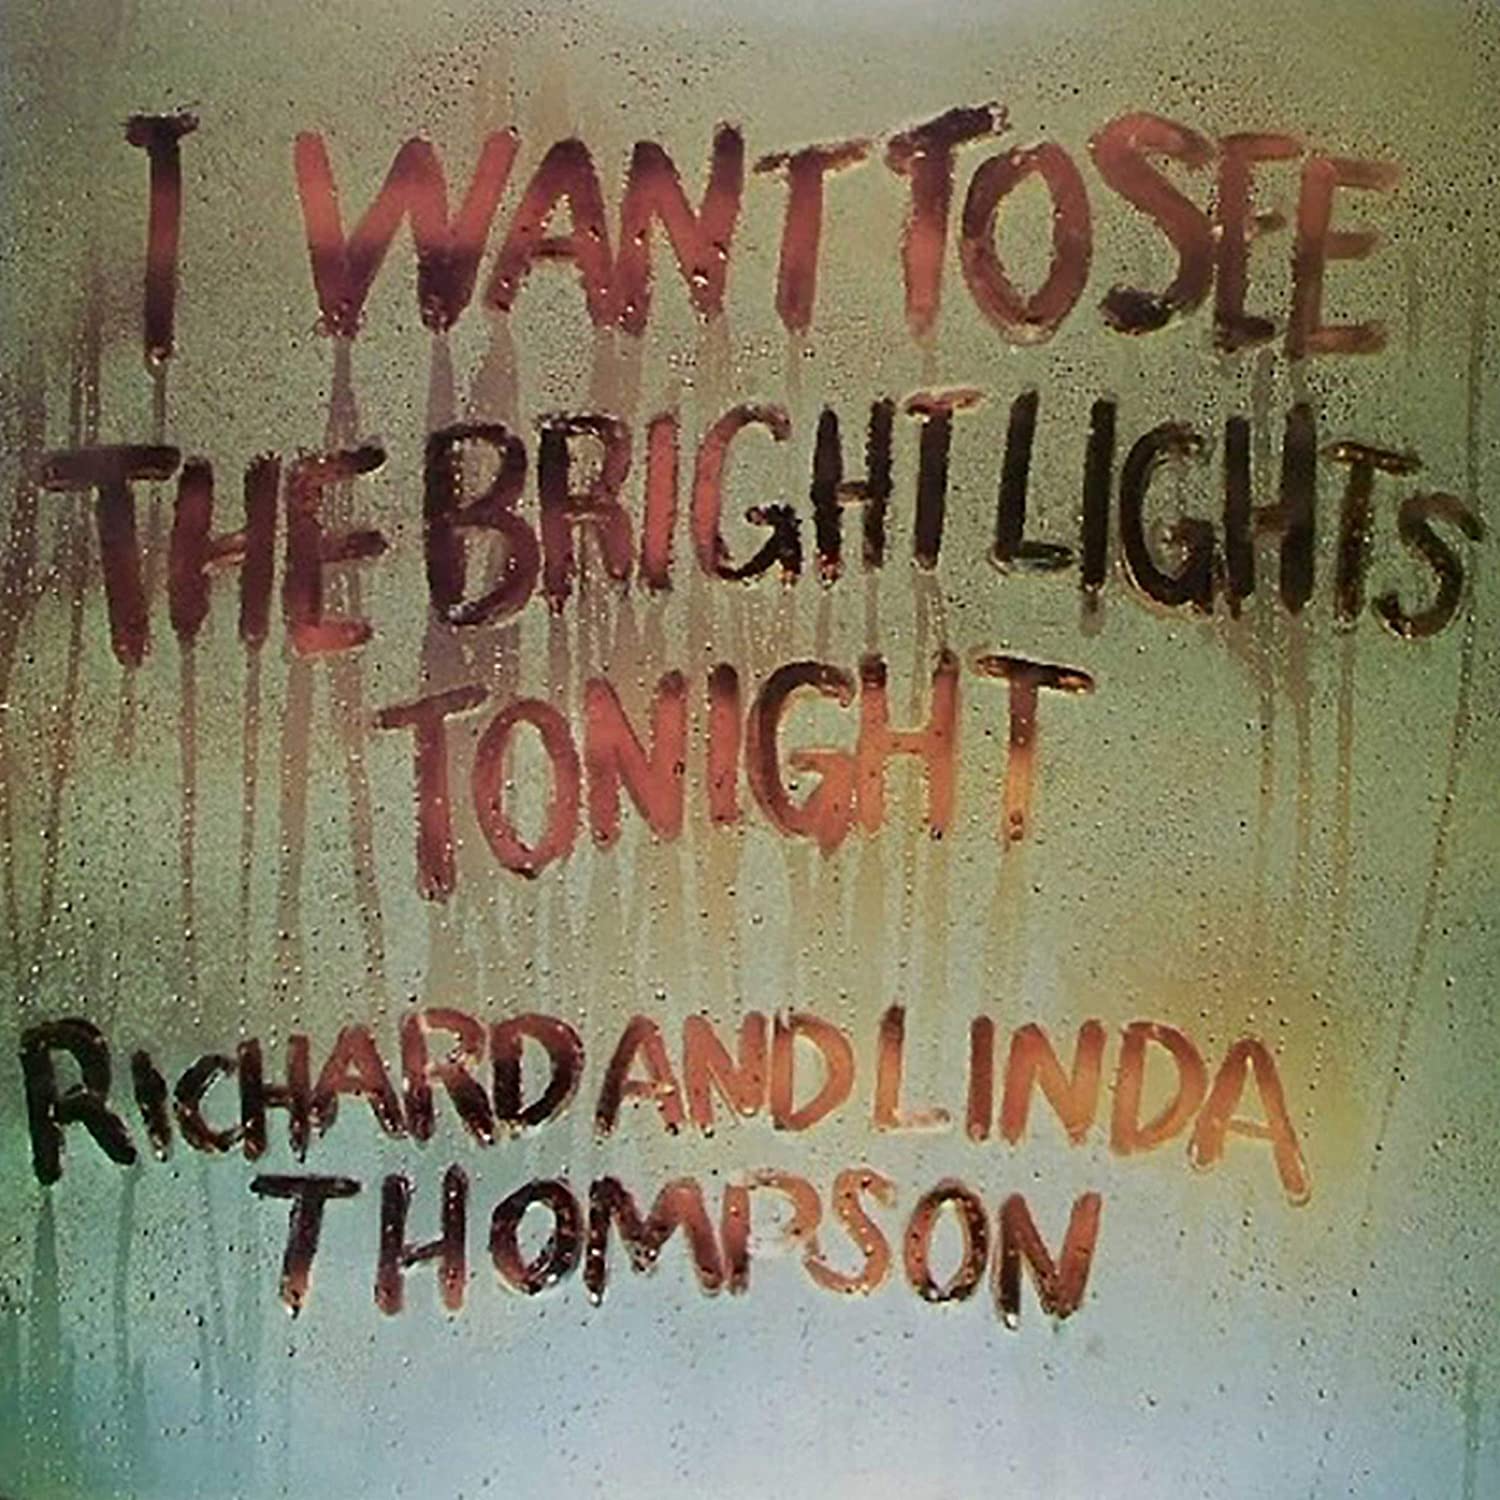 Richard & Linda Thompson– I Wanna To See The Bright Lights Tonight cover album